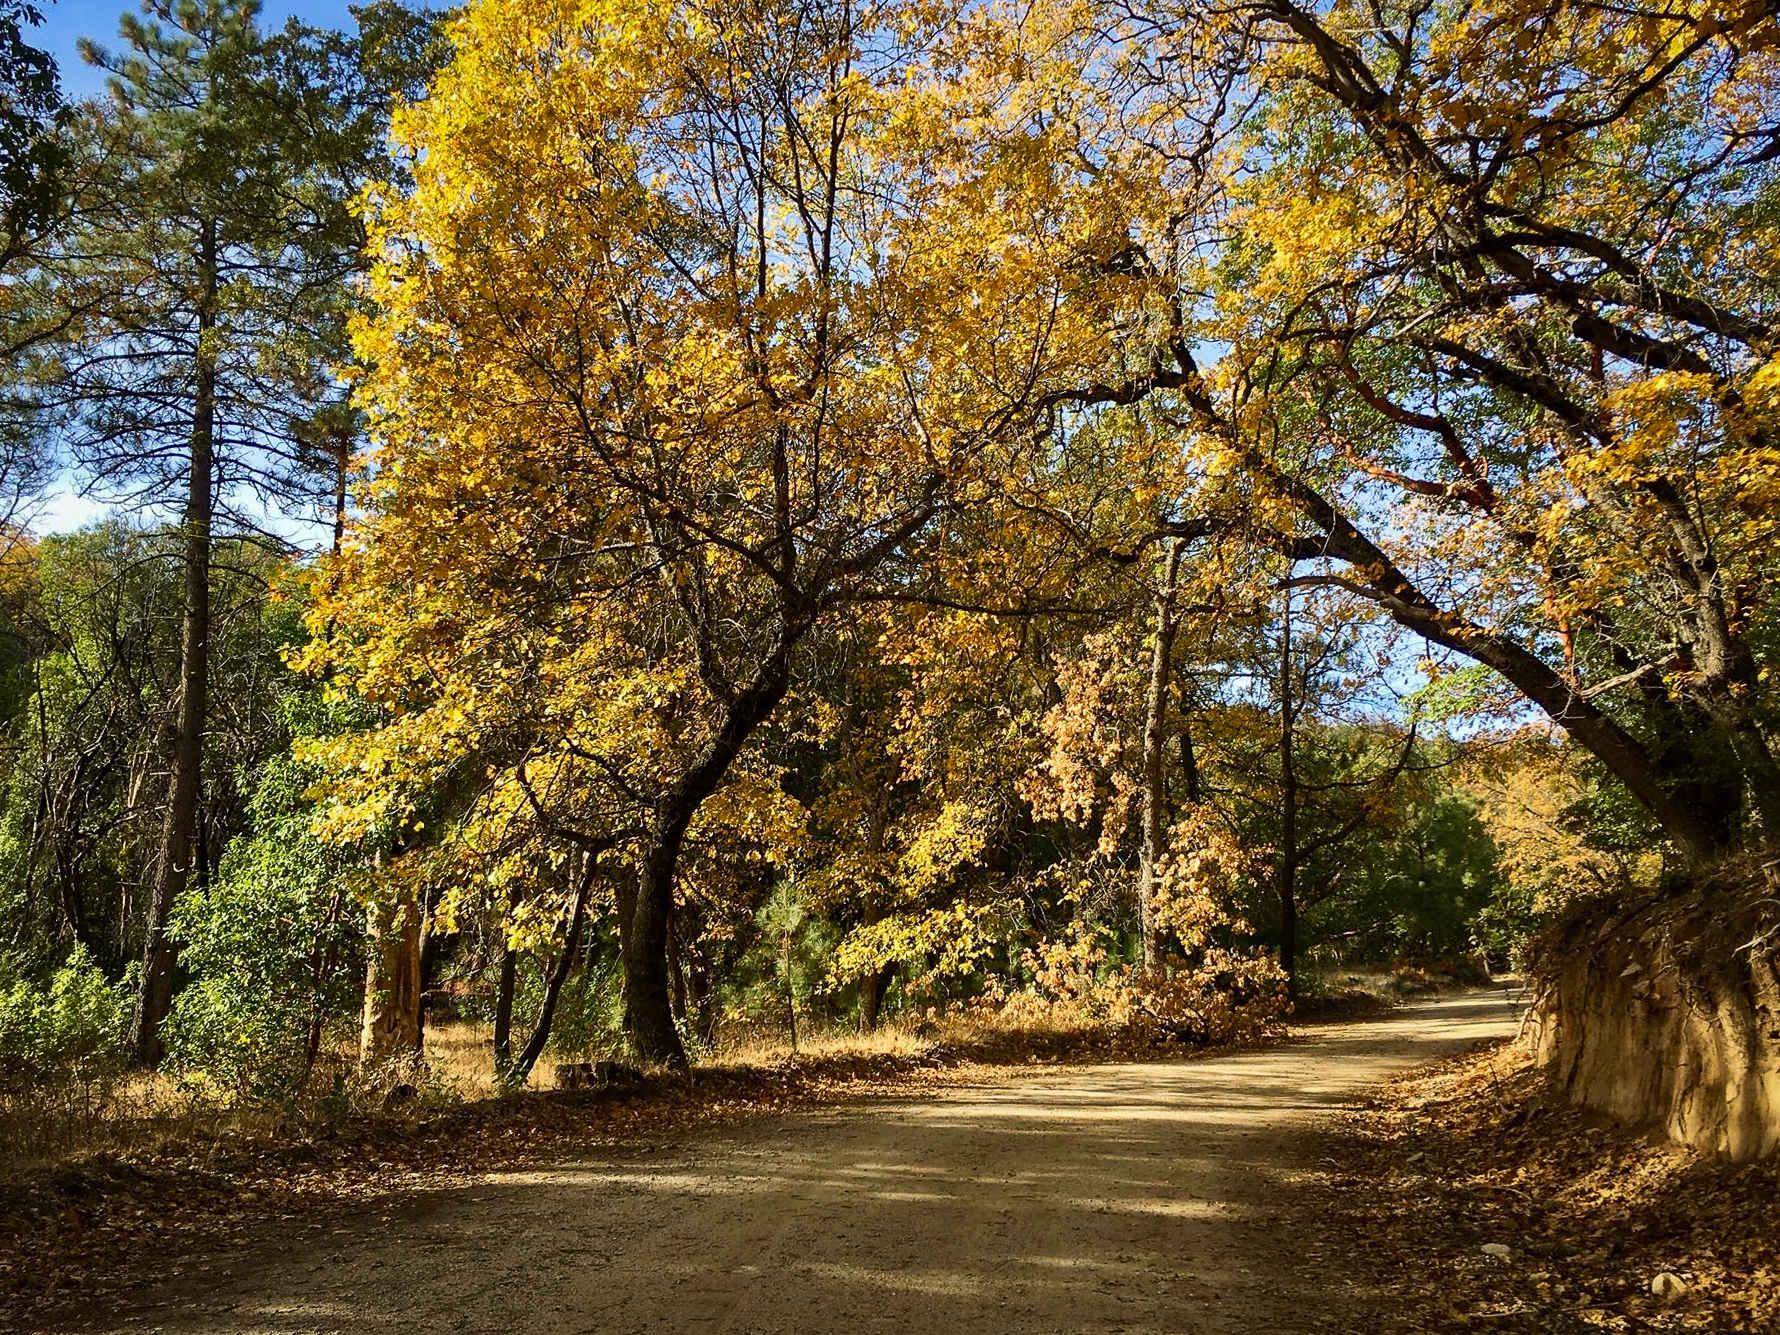 Beauty Returns to the Ventana Wilderness - California Fall ...